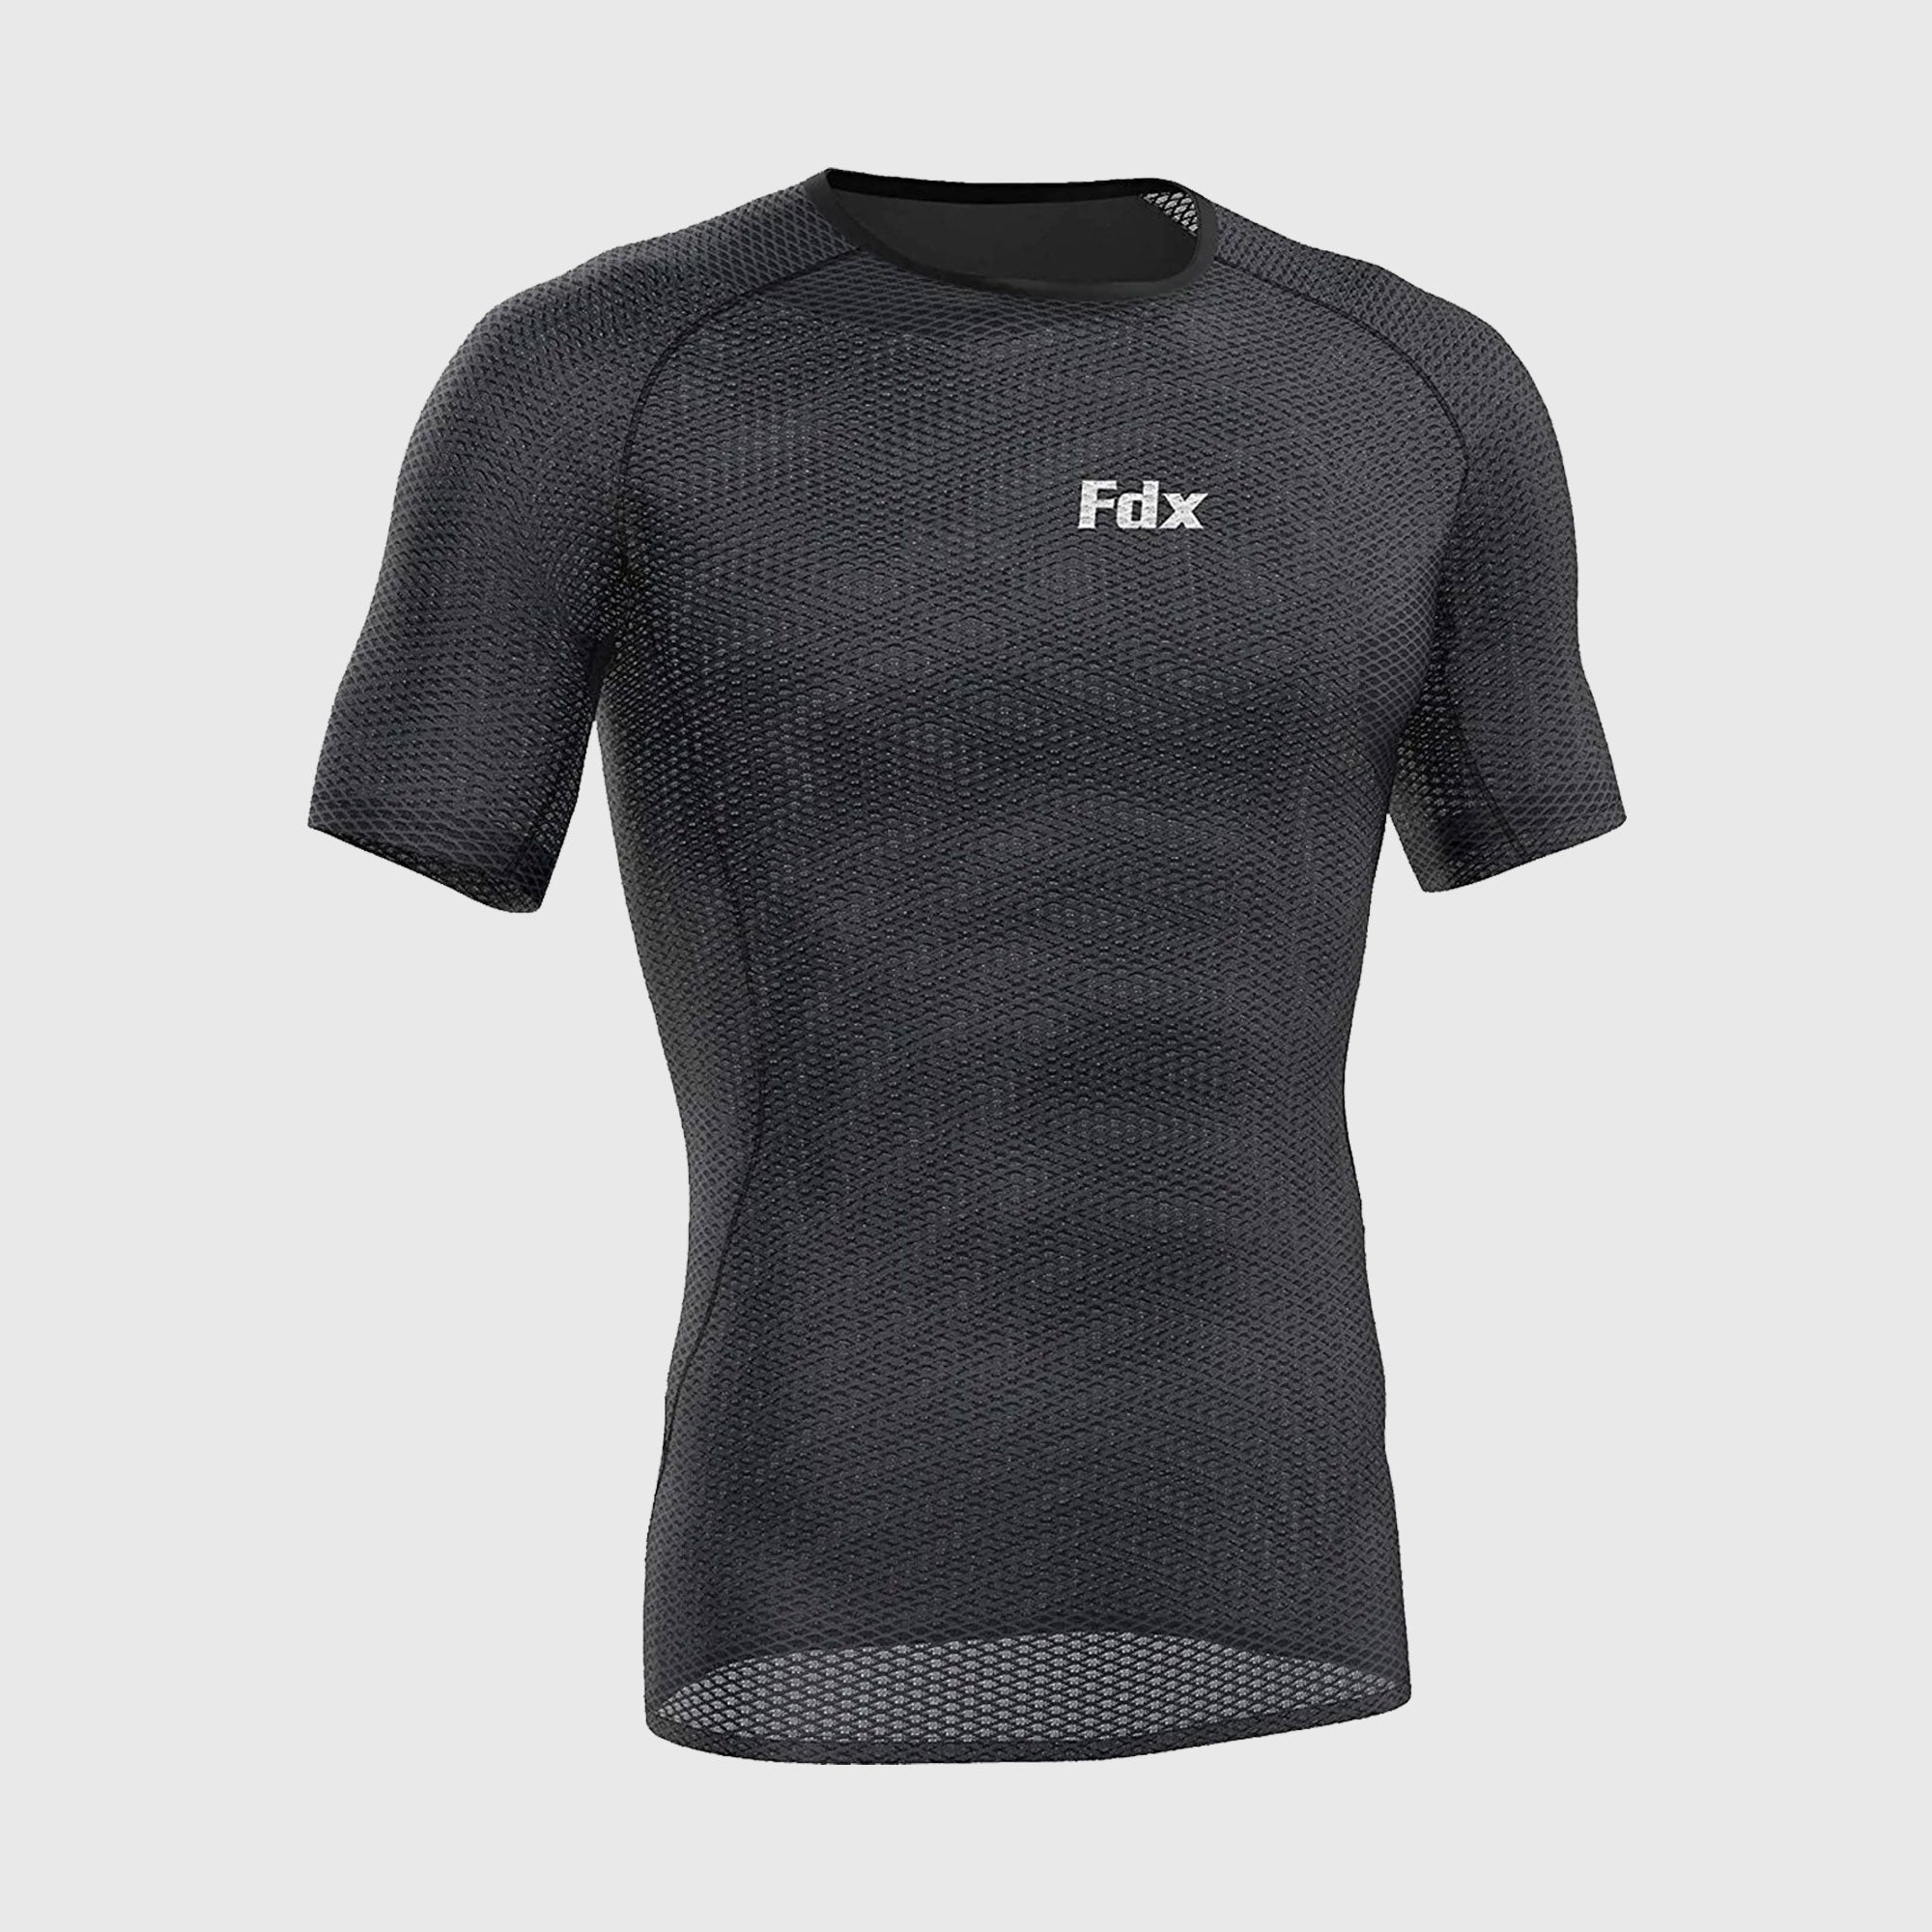 Fdx Mens Black Short Sleeve Mesh Compression Top Running Gym Workout Wear Rash Guard Stretchable Breathable - Aeroform